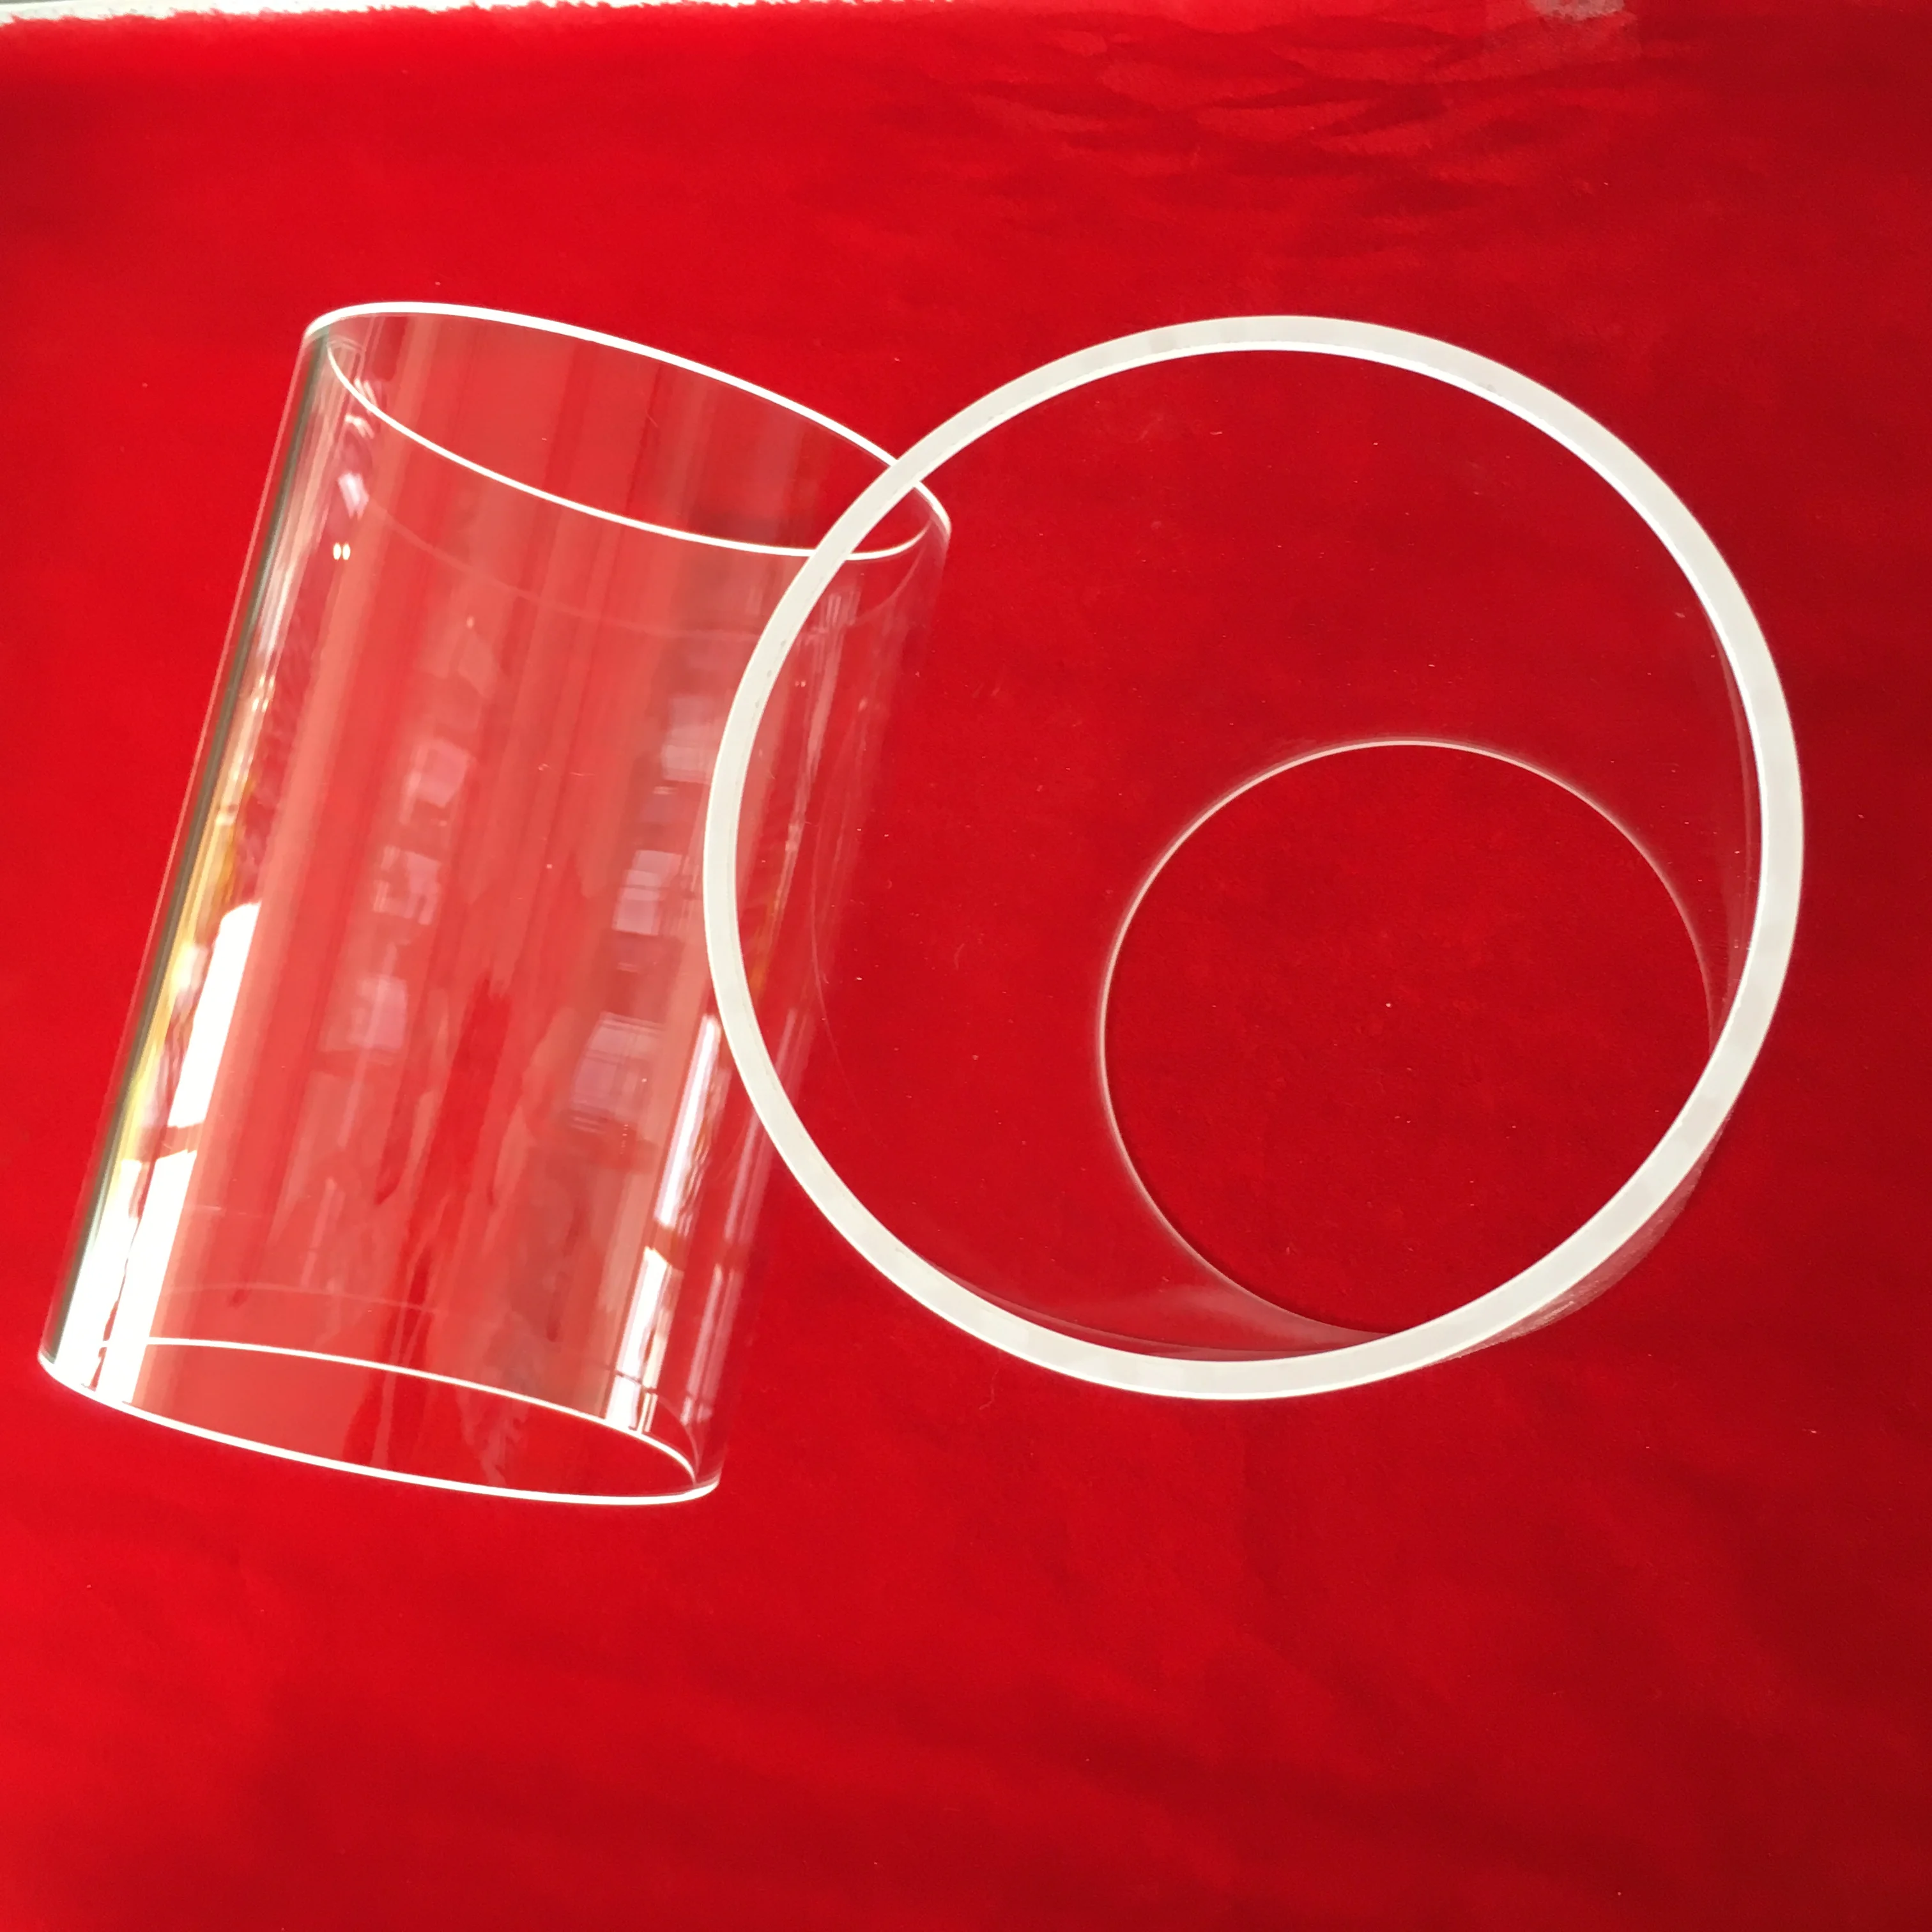 
High quality large diameter clear quartz glass tube 